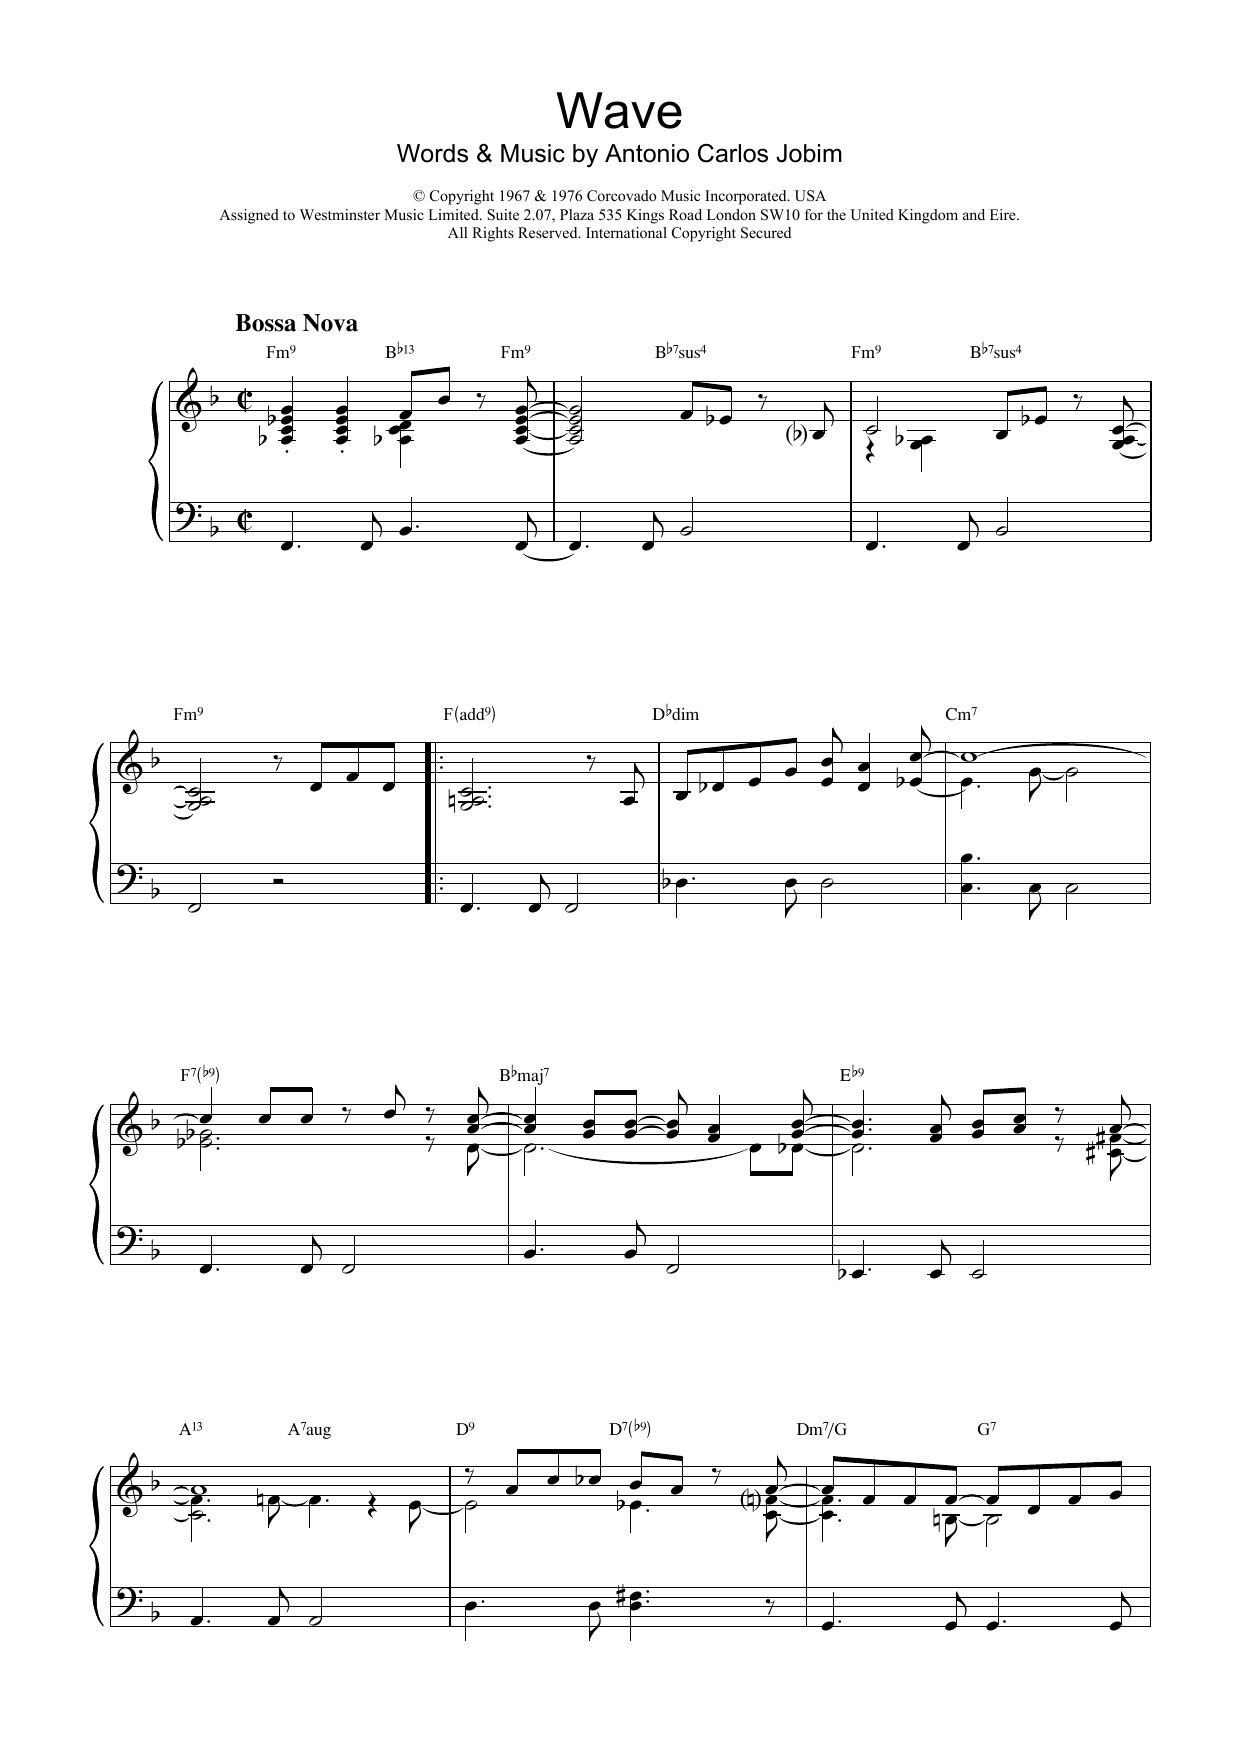 Antonio Carlos Jobim Wave Sheet Music Notes & Chords for Alto Saxophone - Download or Print PDF